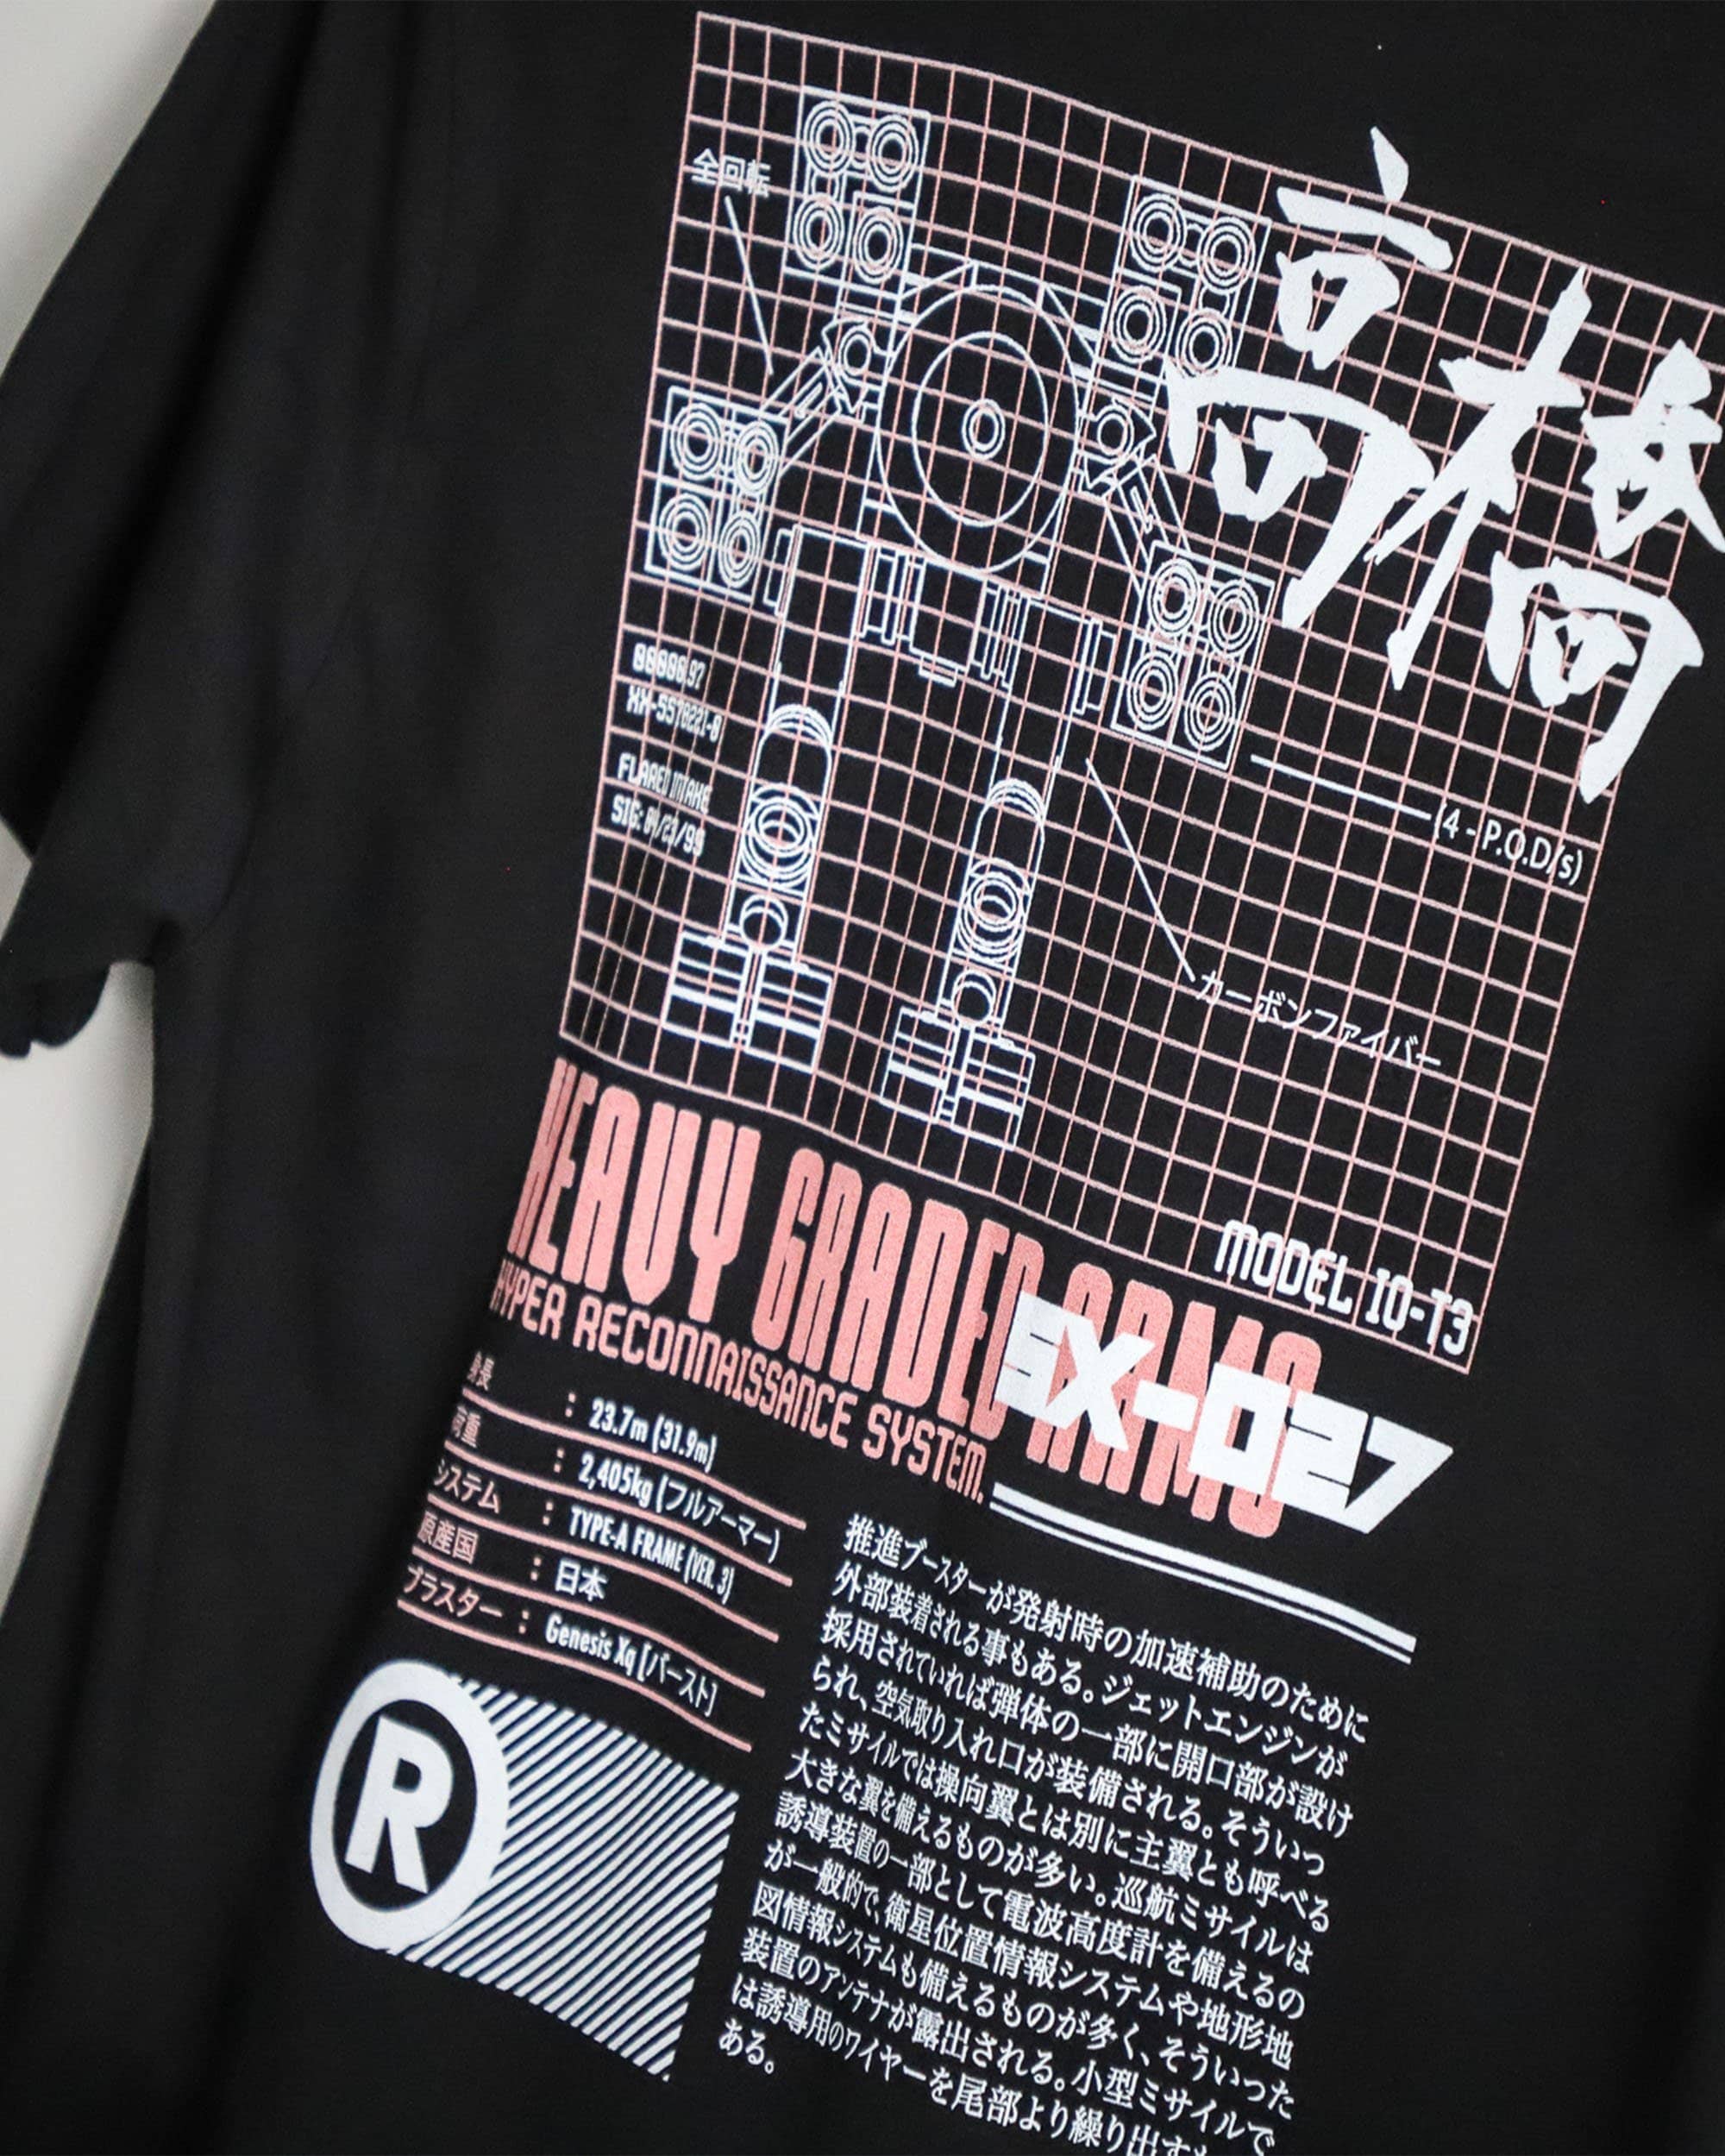 Retro Anime Robot T-Shirts for Sale